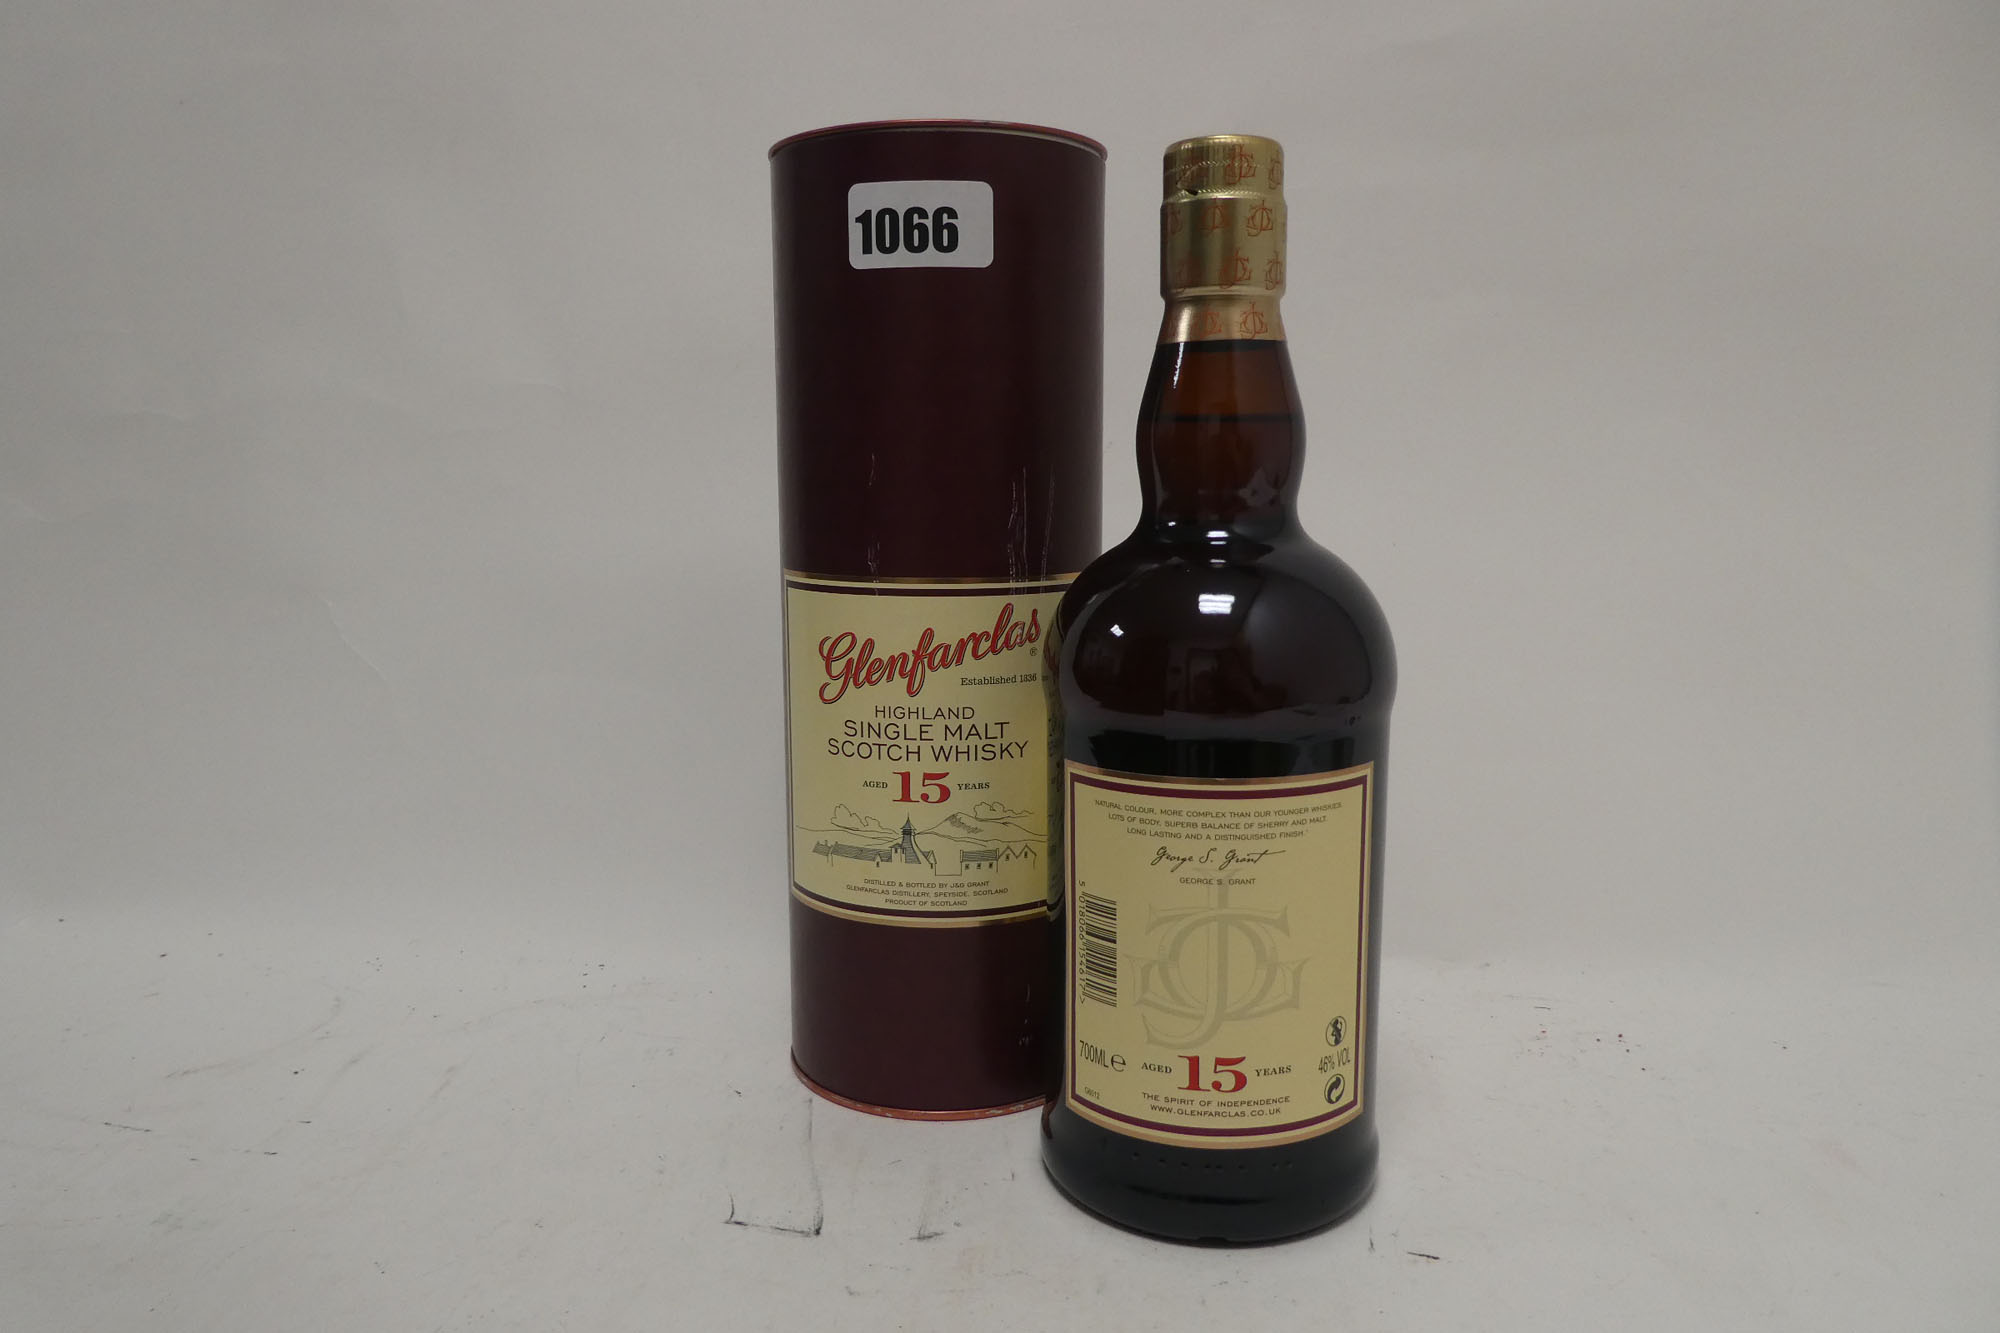 A bottle of Glenfarclas 15 year old Highland Single Malt Scotch Whisky with carton 70cl 46% - Image 2 of 2